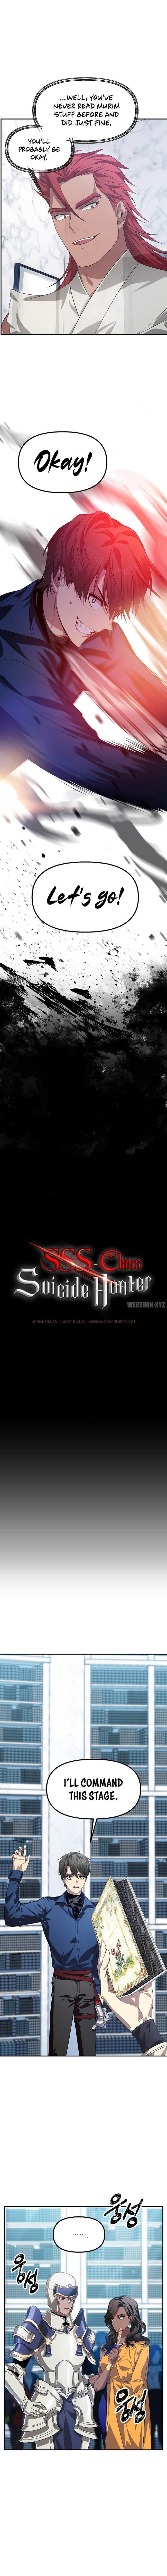 sss-class-suicide-hunter-chap-84-4